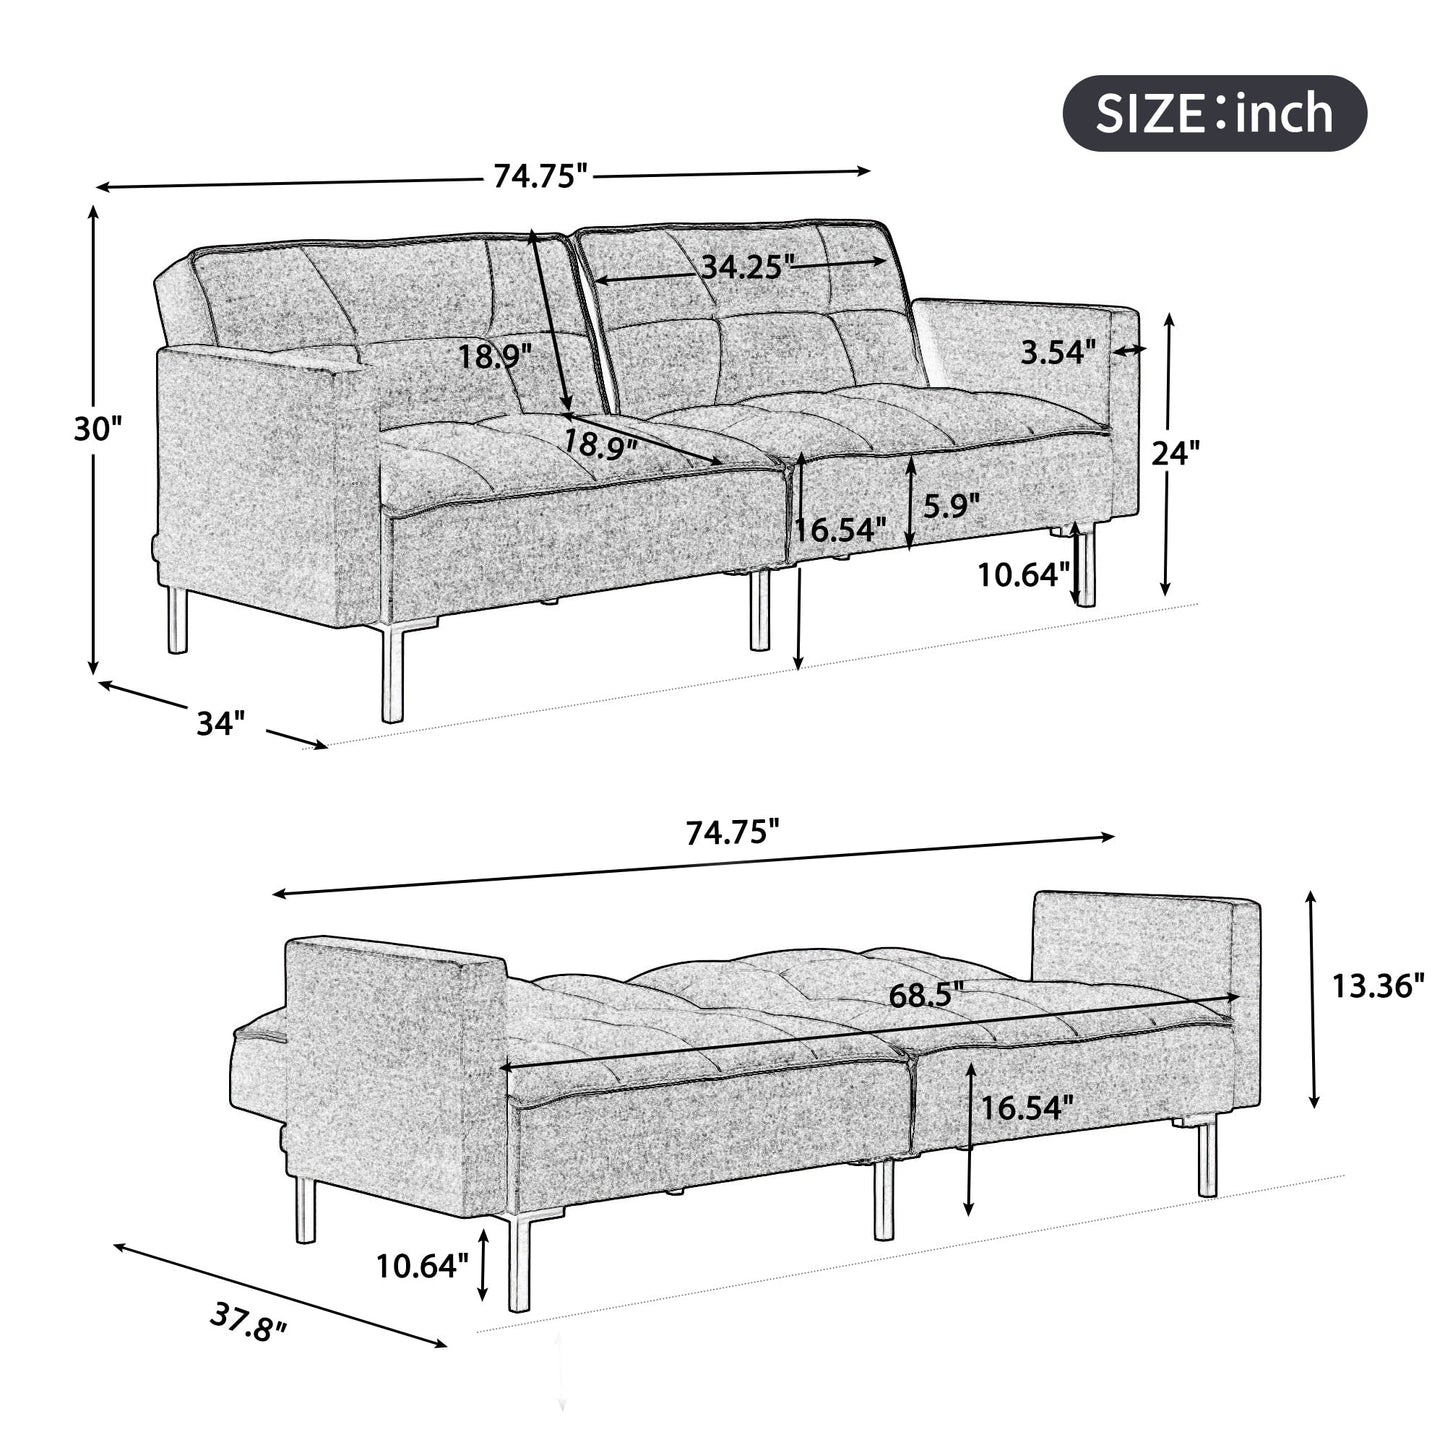 Folding Futon Sofa